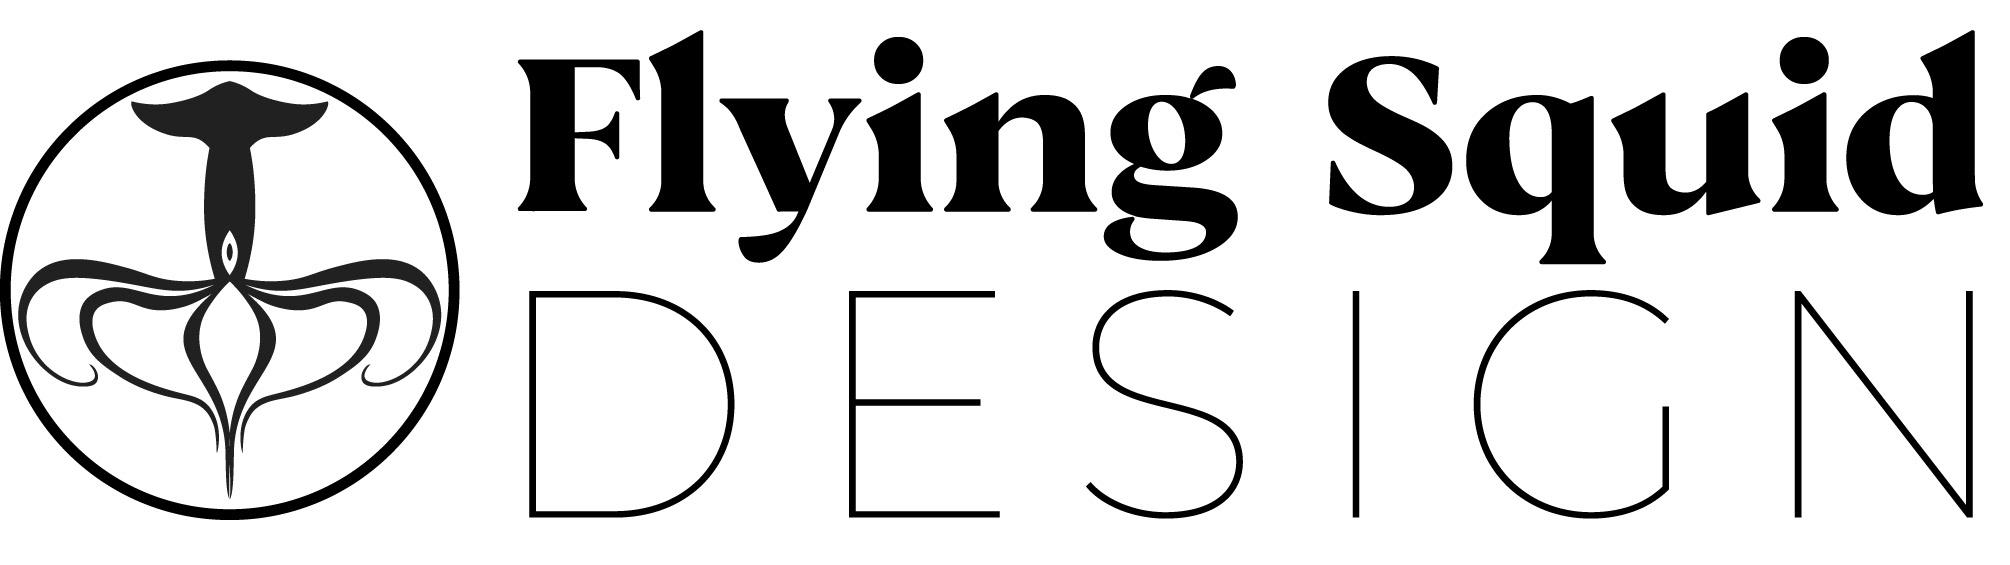 Flying Squid logo